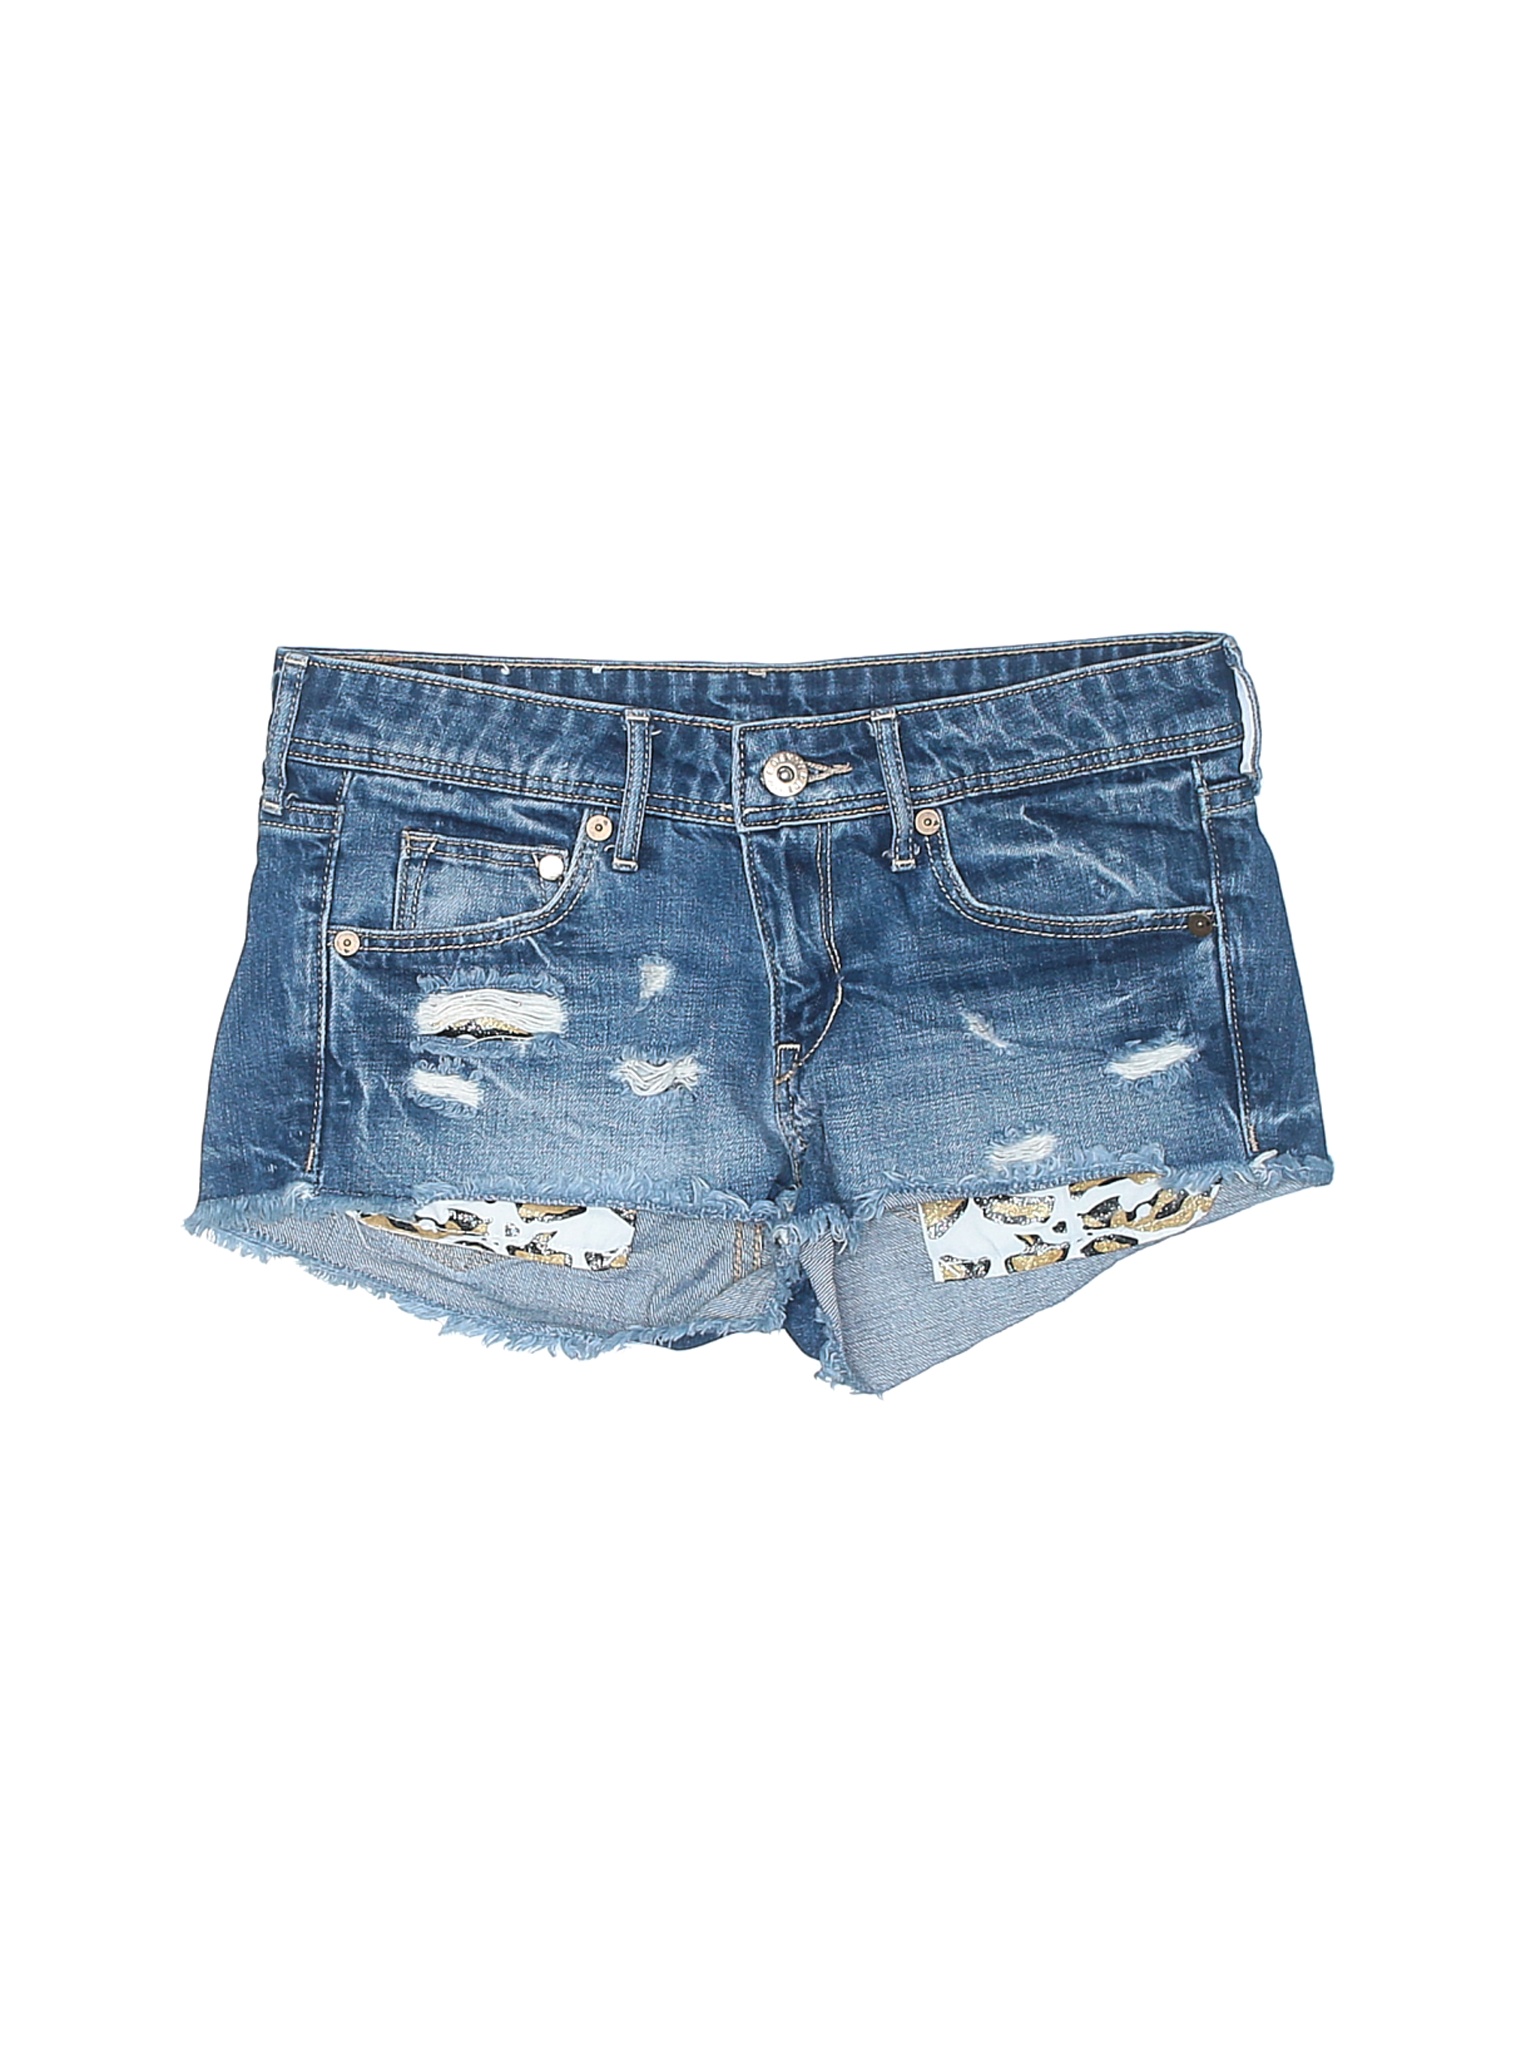 Denimist Women Blue Denim Shorts 4 | eBay